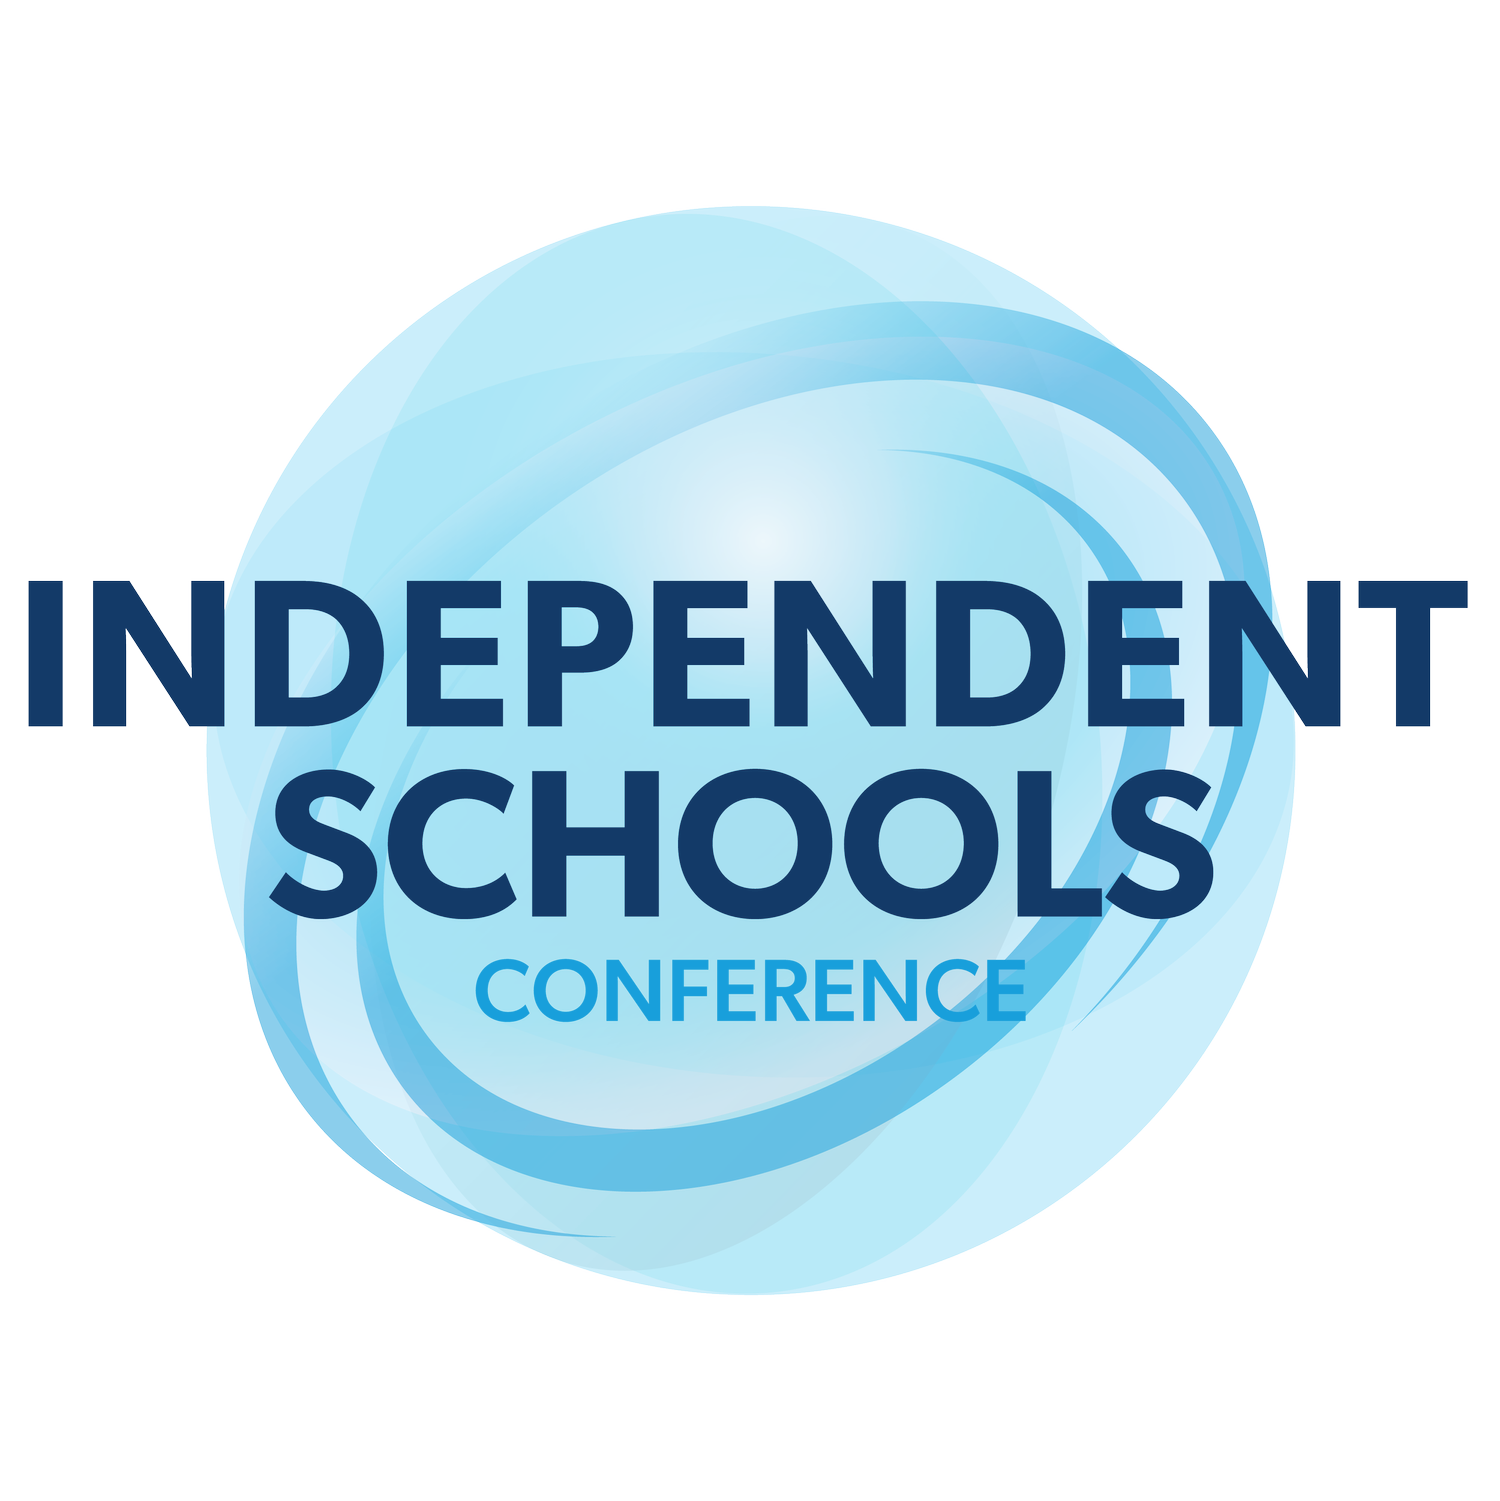 Independent Schools Conference